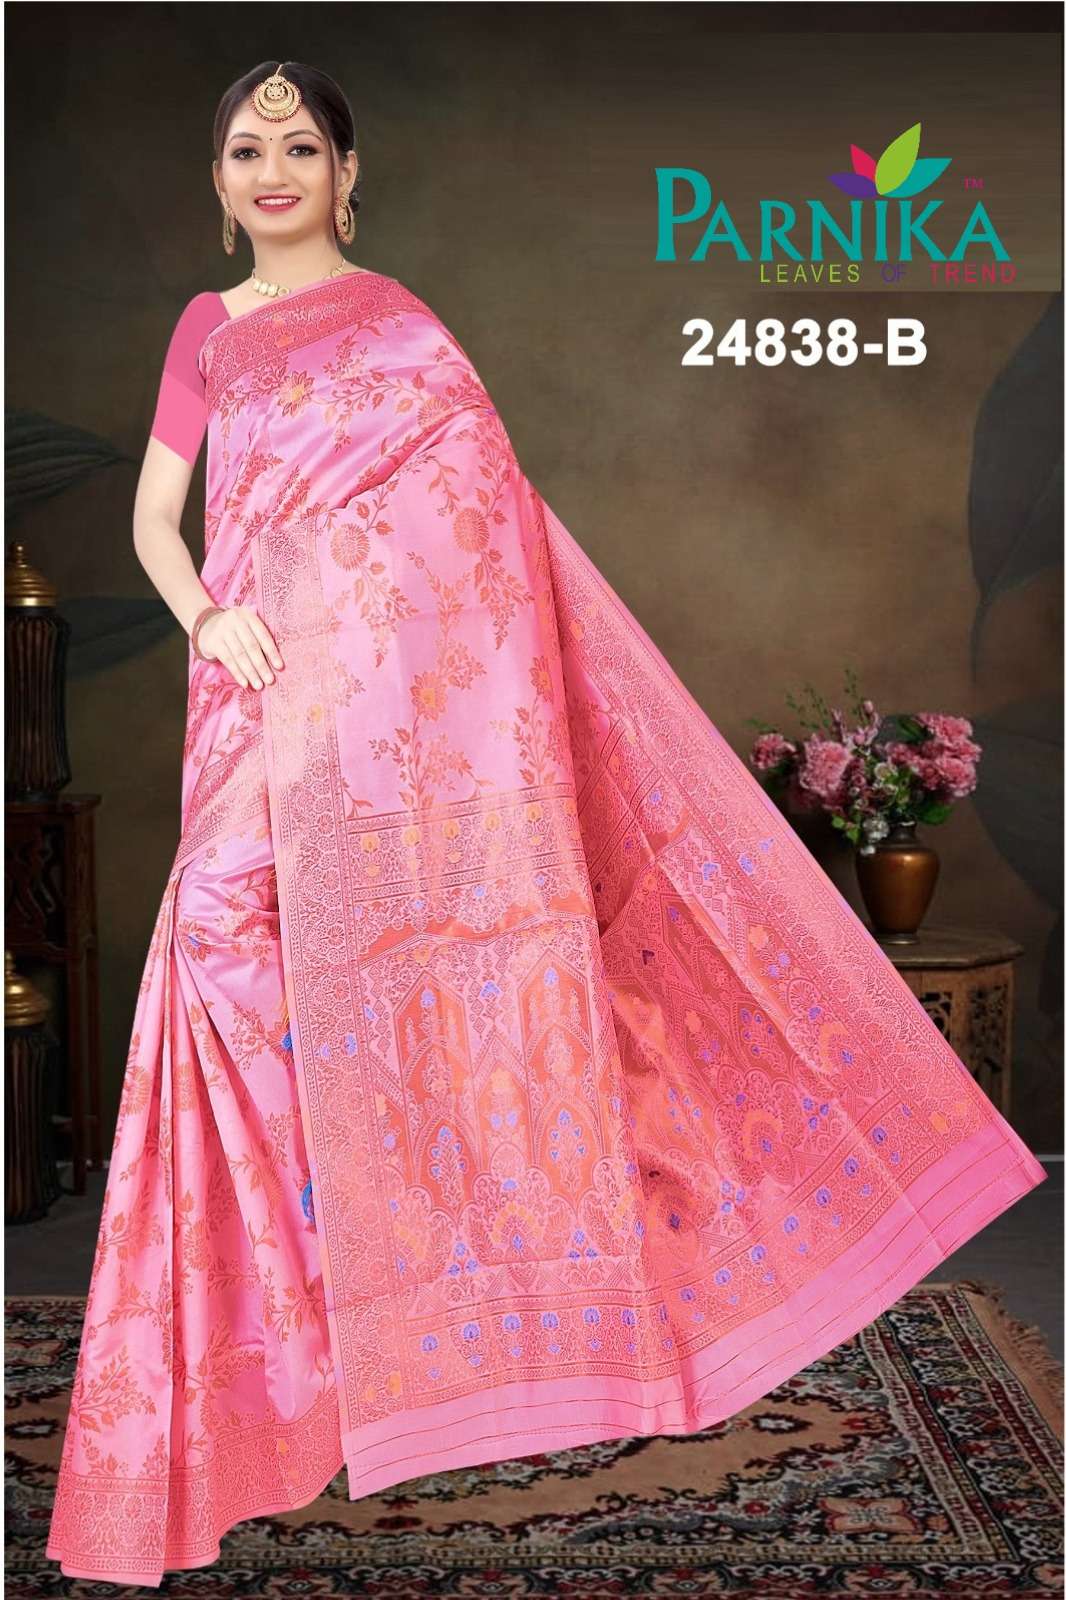 Parnika India Lichi Silk Jacquard Sarees Festive Wear Wedding Saree in Wholesale rate - 24838